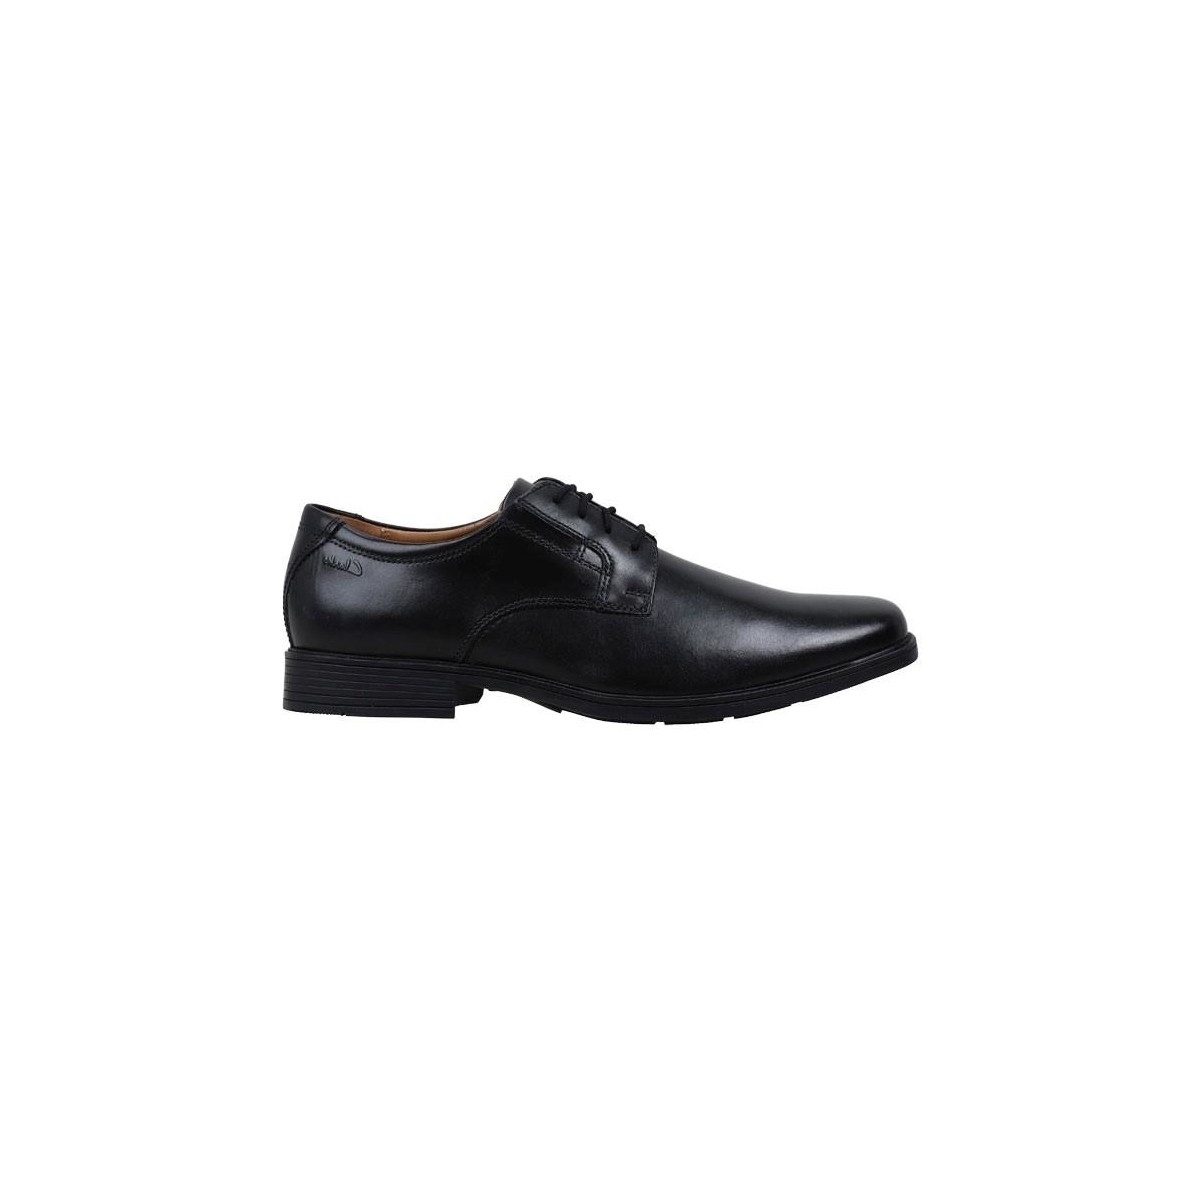 Schuhe Herren Derby-Schuhe & Richelieu Clarks Tilden Plain Schwarz